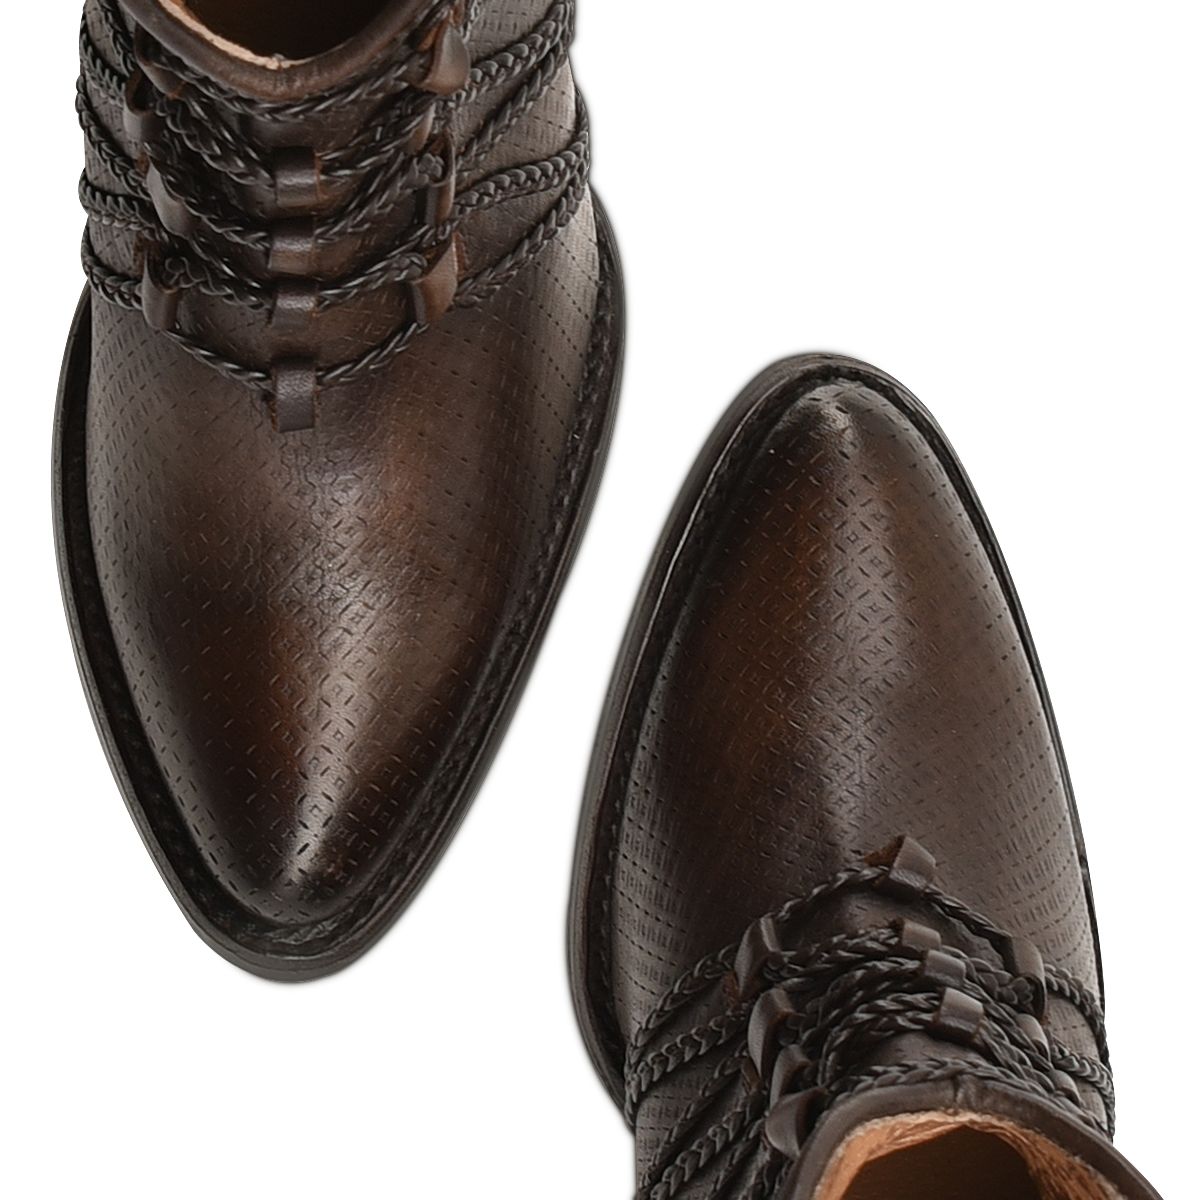 3F90RS - Cuadra mocha fashion cowboy leather ankle boots for women-Kuet.us